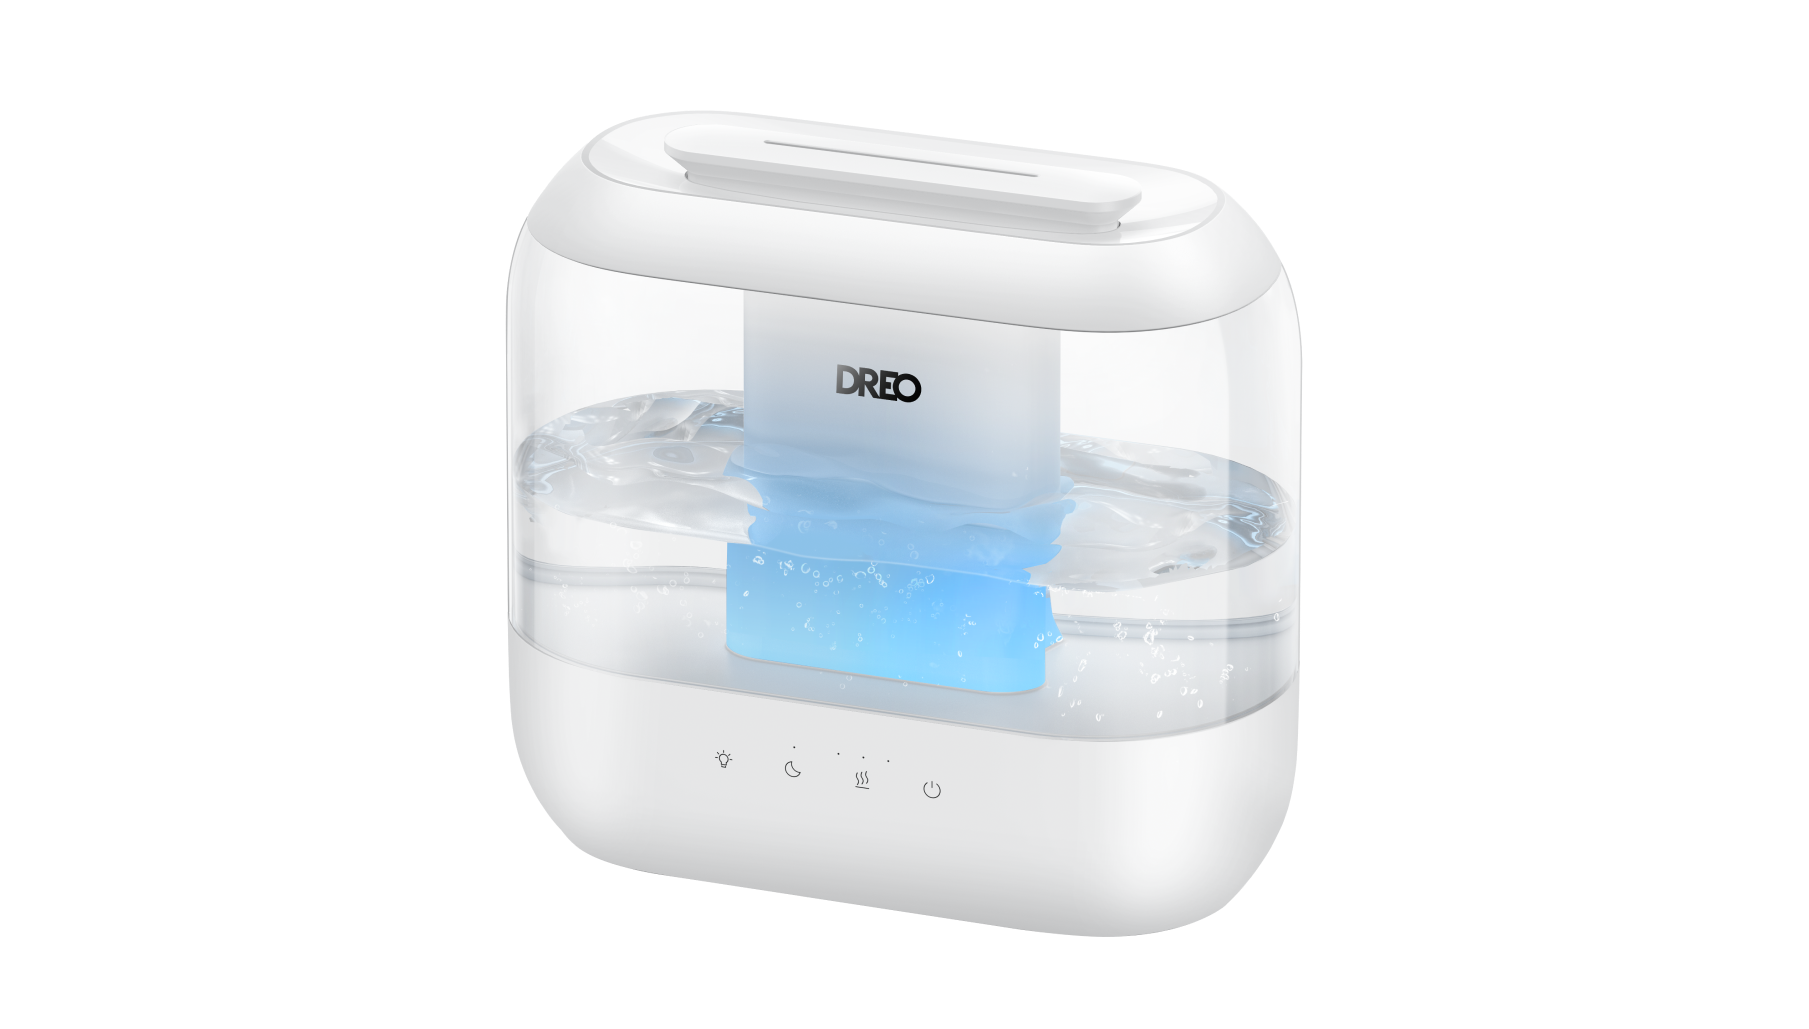 Dreo Fully Functional Aircrisp Pro 4 Quart Air Fryer - Dreo